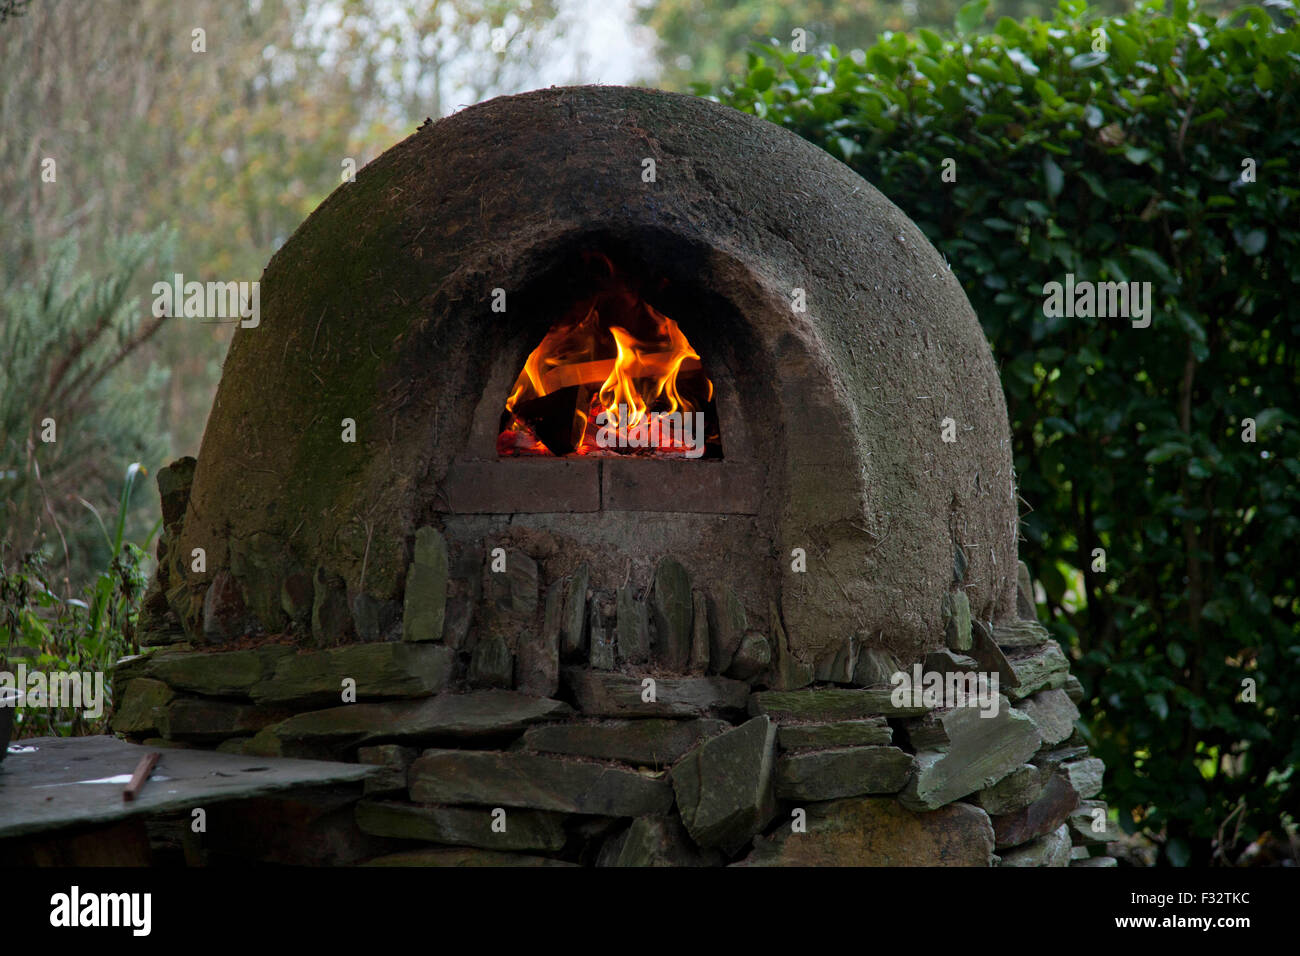 Cob oven fire Stock Photo